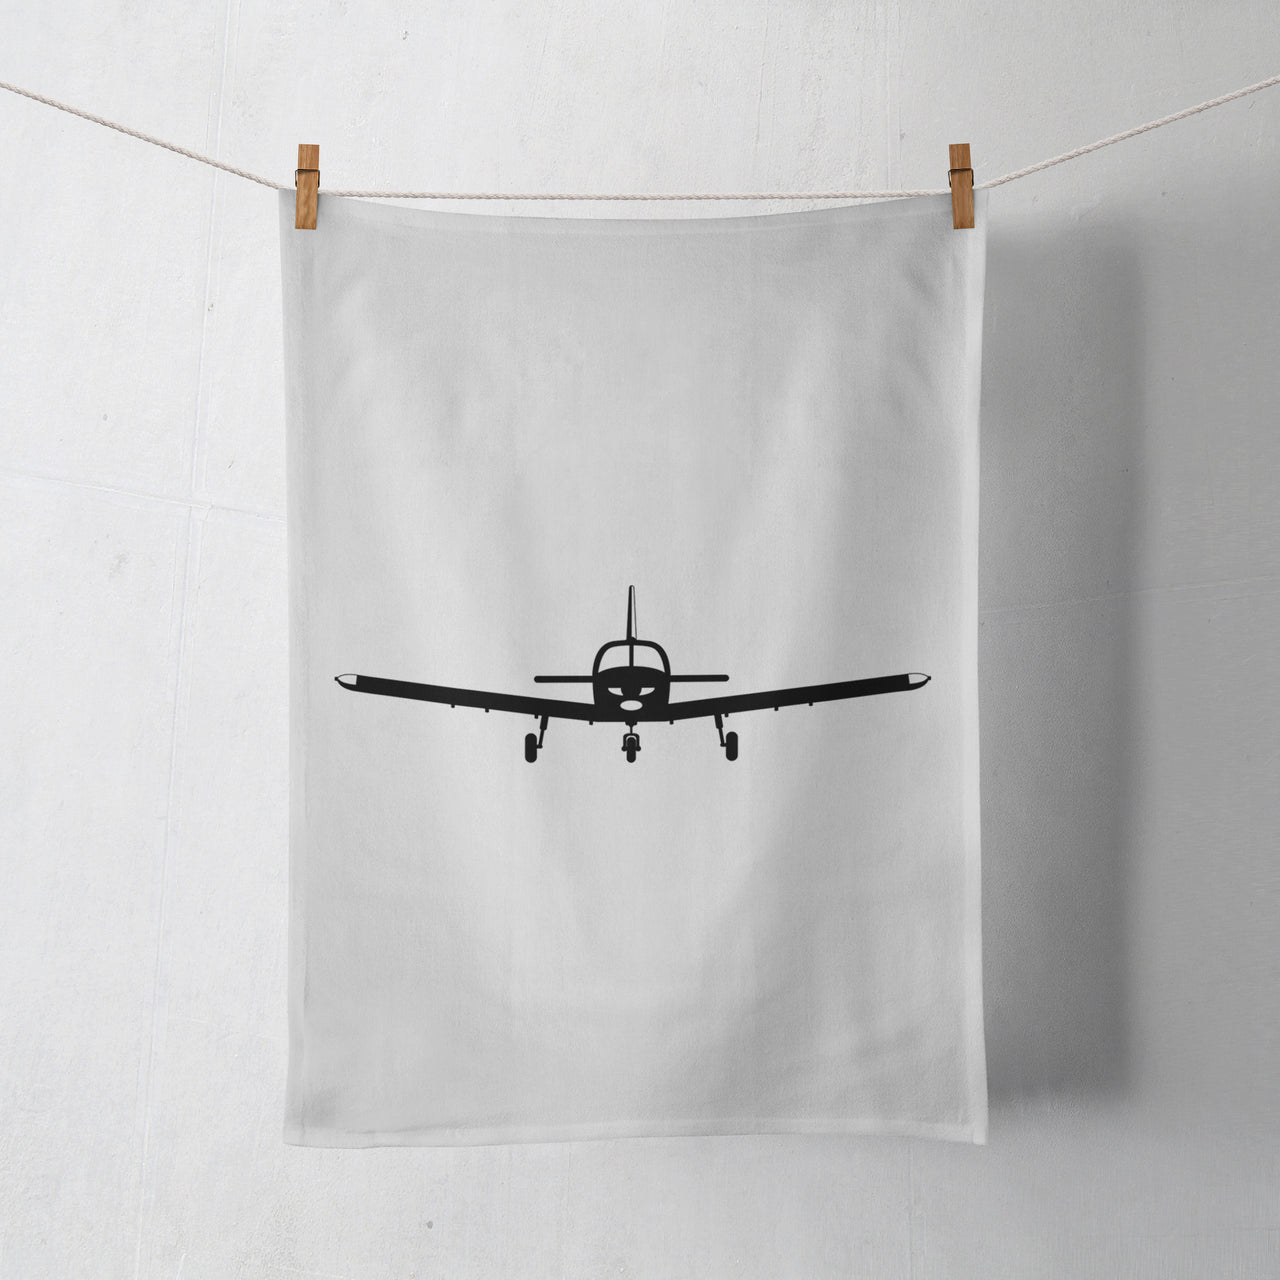 Piper PA28 Silhouette Plane Designed Towels